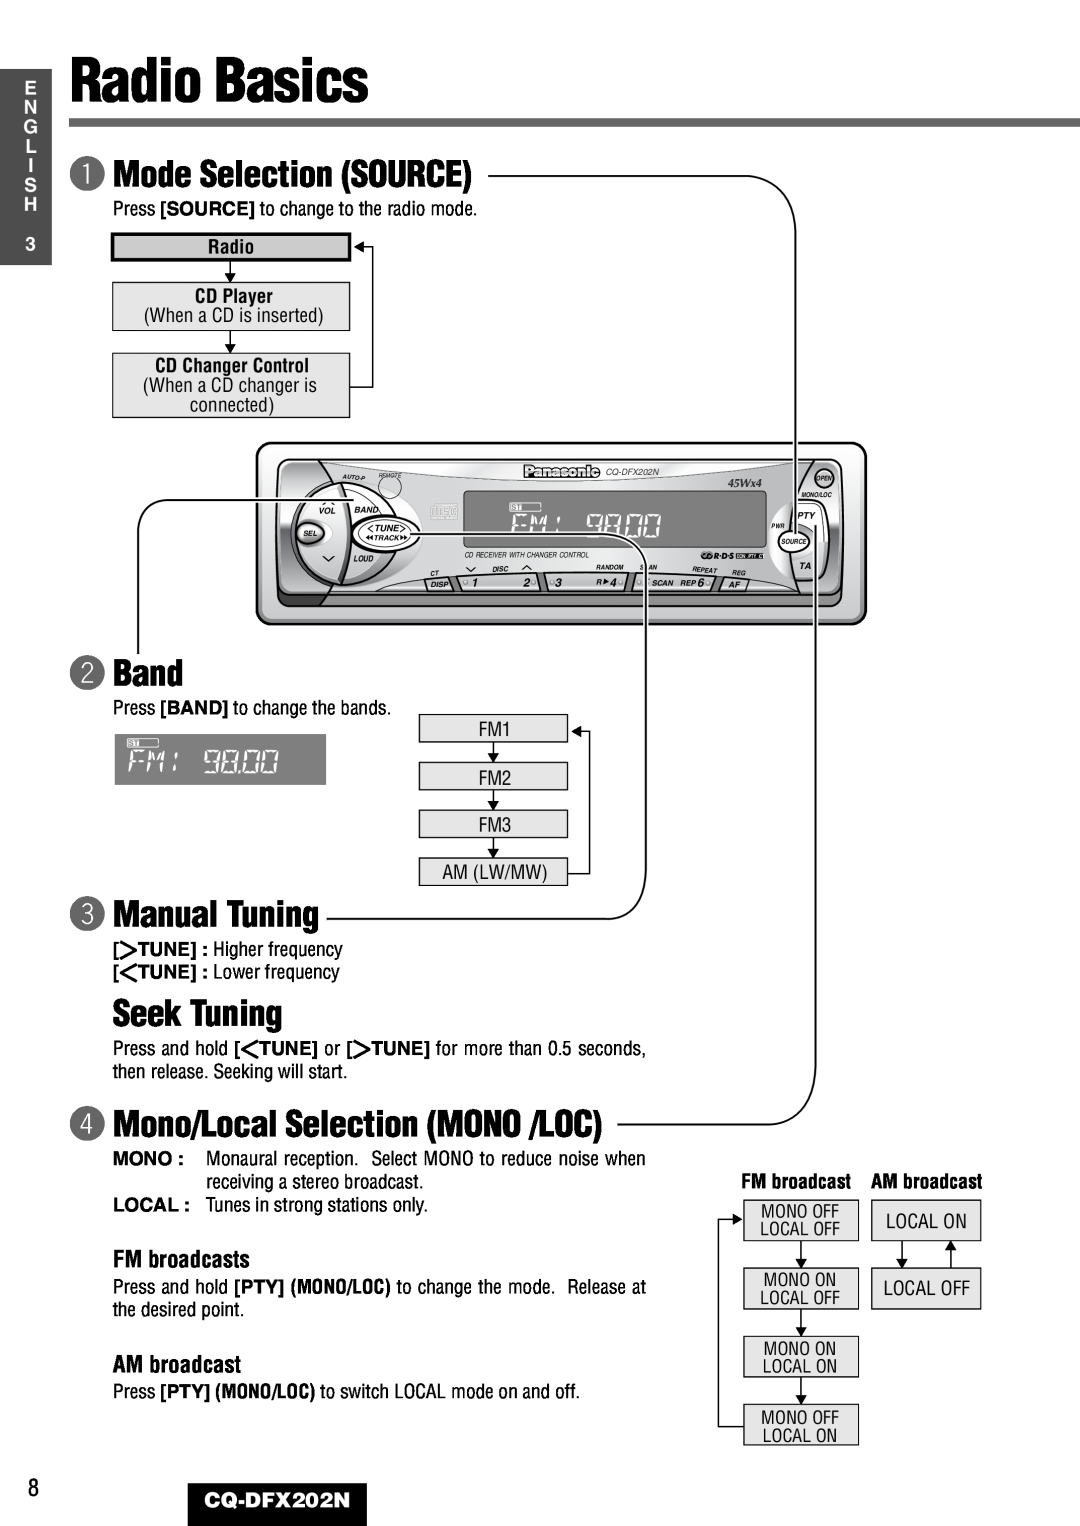 Panasonic CQ-DFX202N Radio Basics, q Mode Selection SOURCE, wBand, e Manual Tuning, Seek Tuning, FM broadcasts 